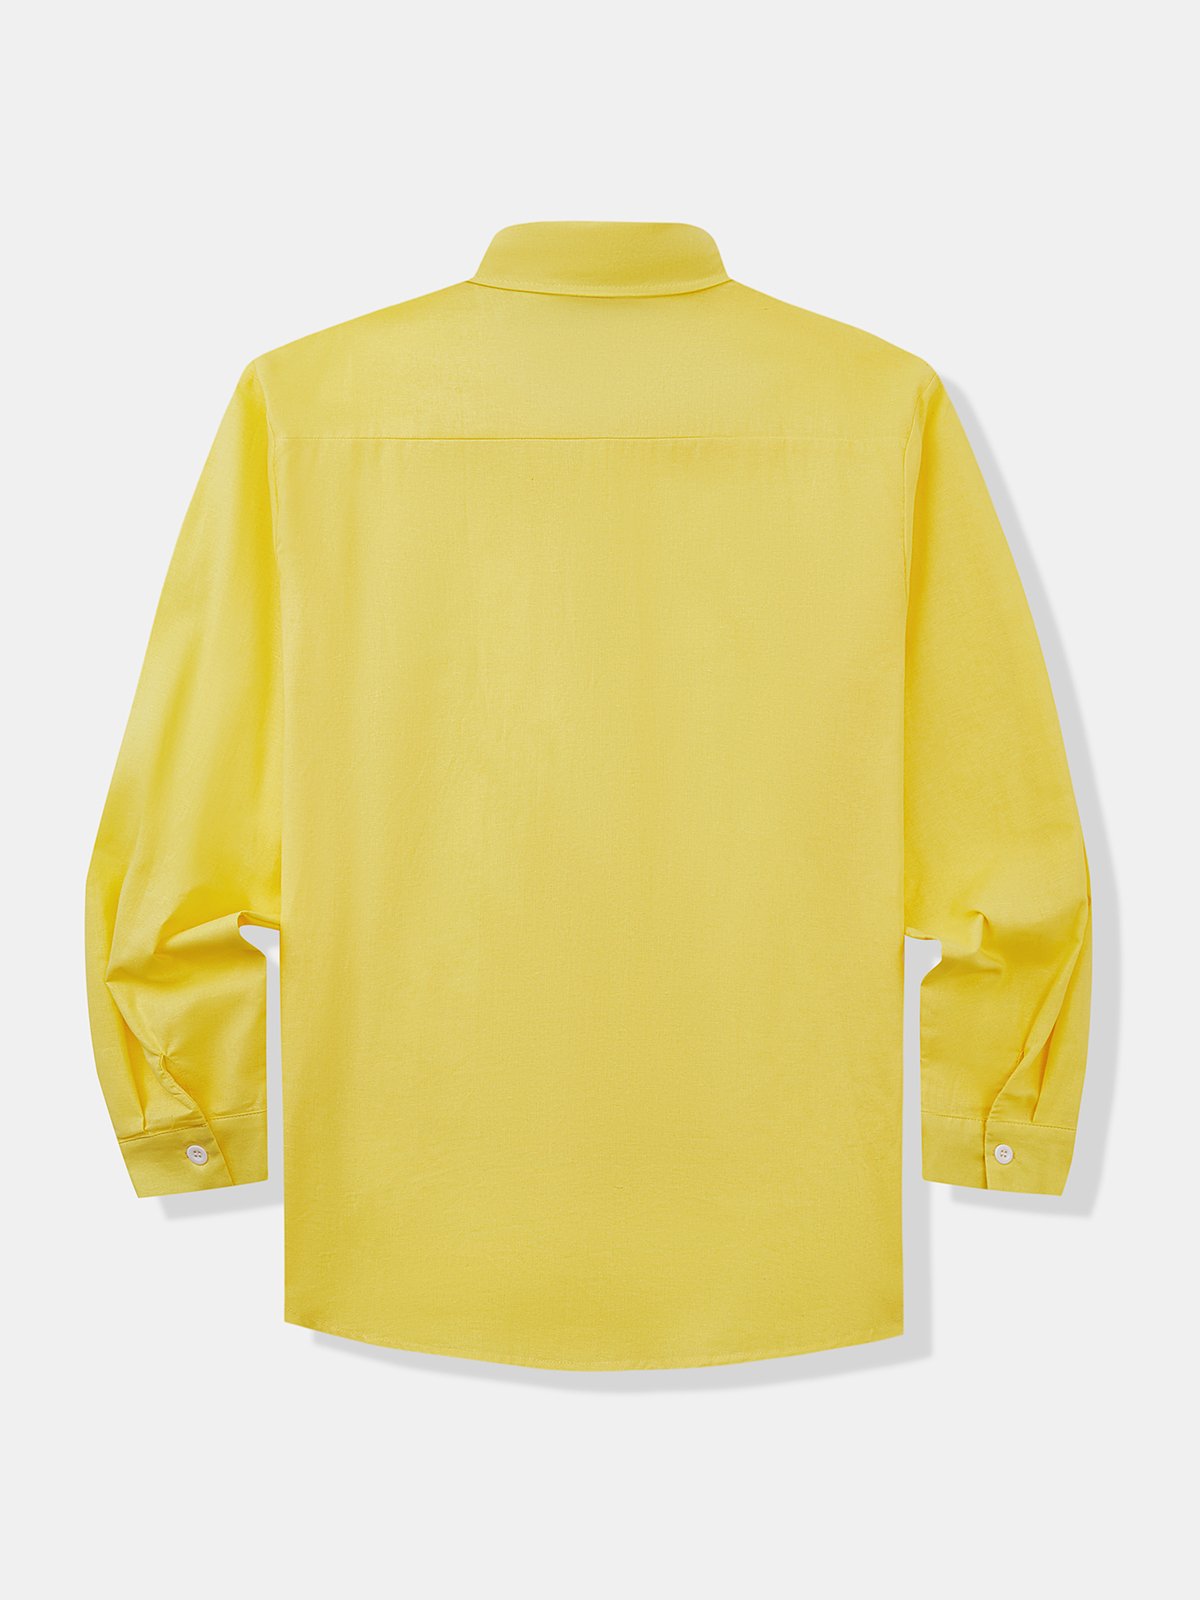 Hardaddy Cotton Plain Long Sleeve Casual Shirt